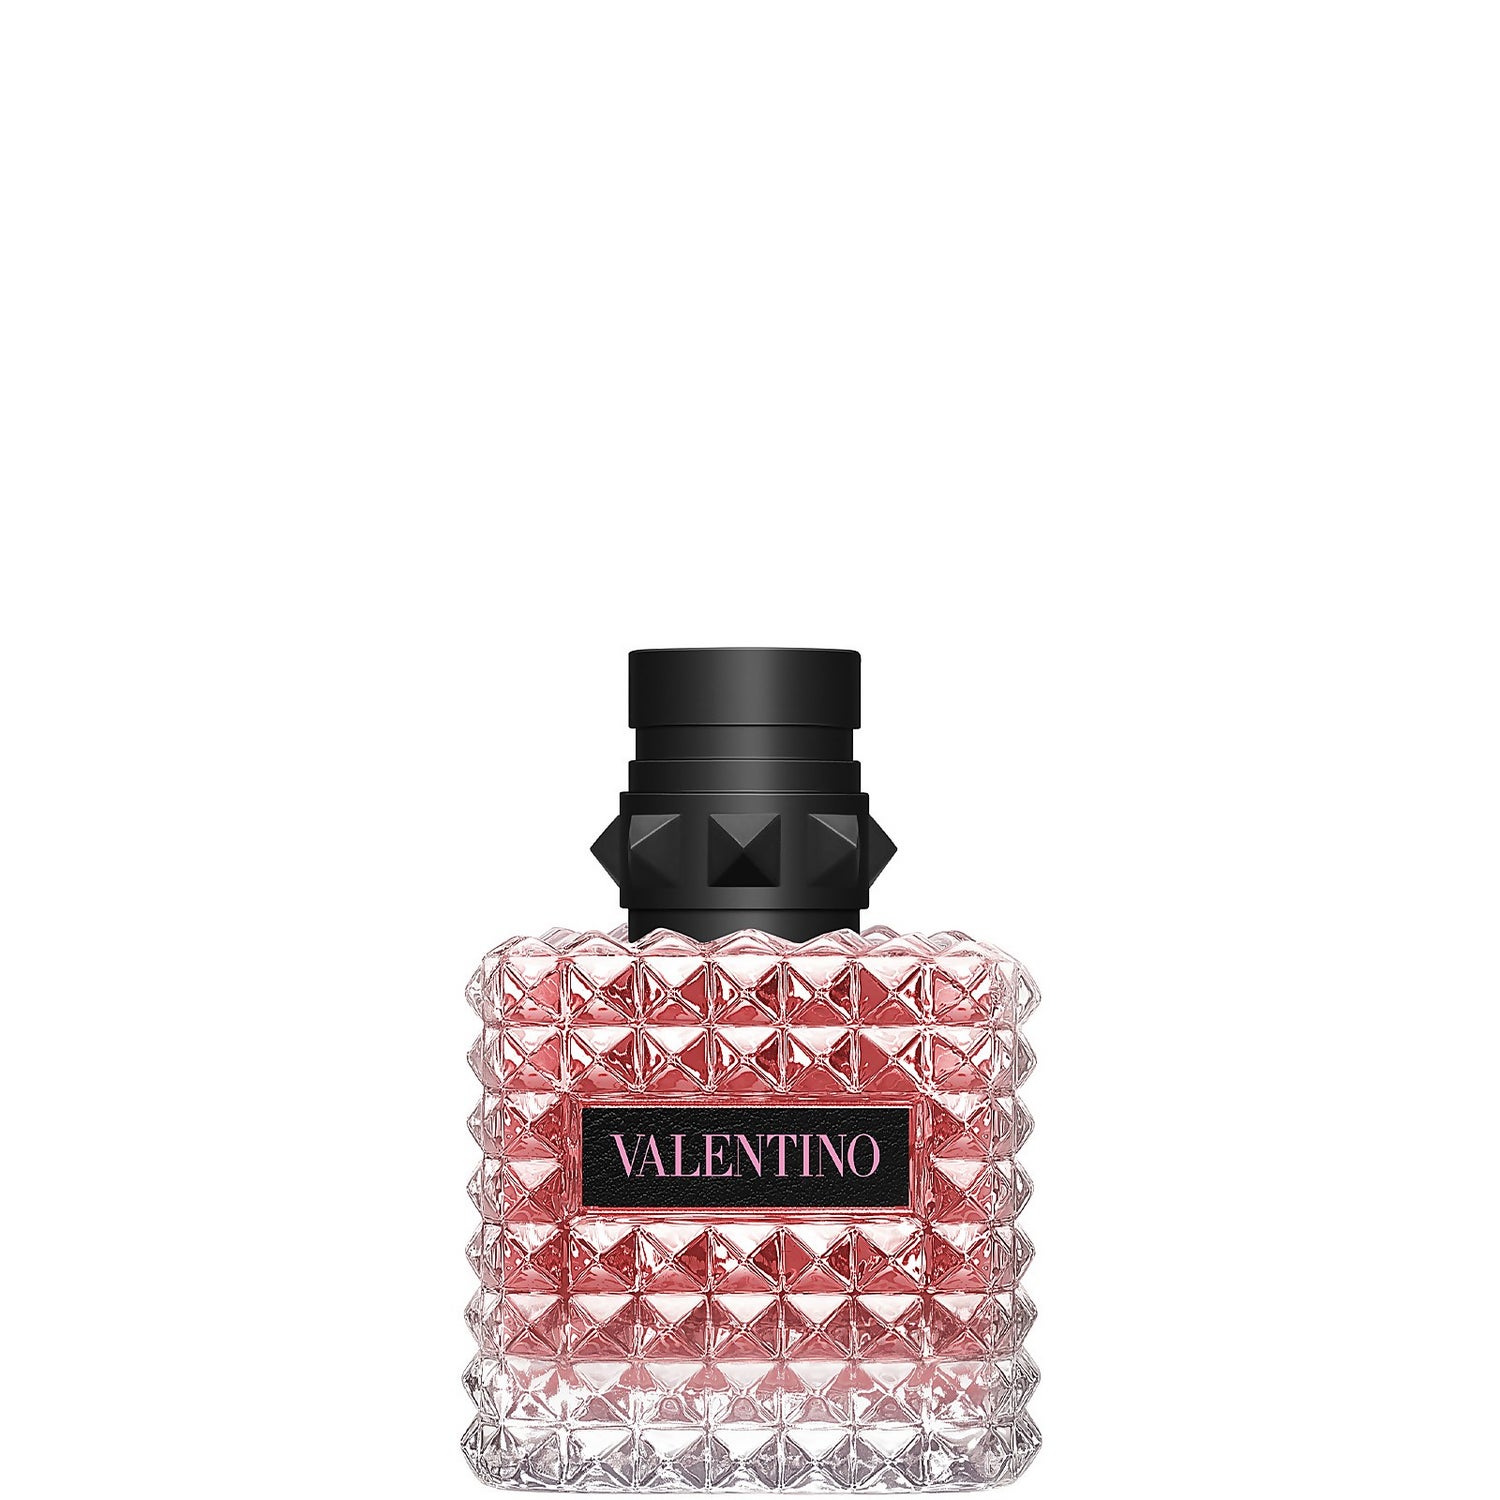 Valentino Blush Perfume Review Outlet | website.jkuat.ac.ke